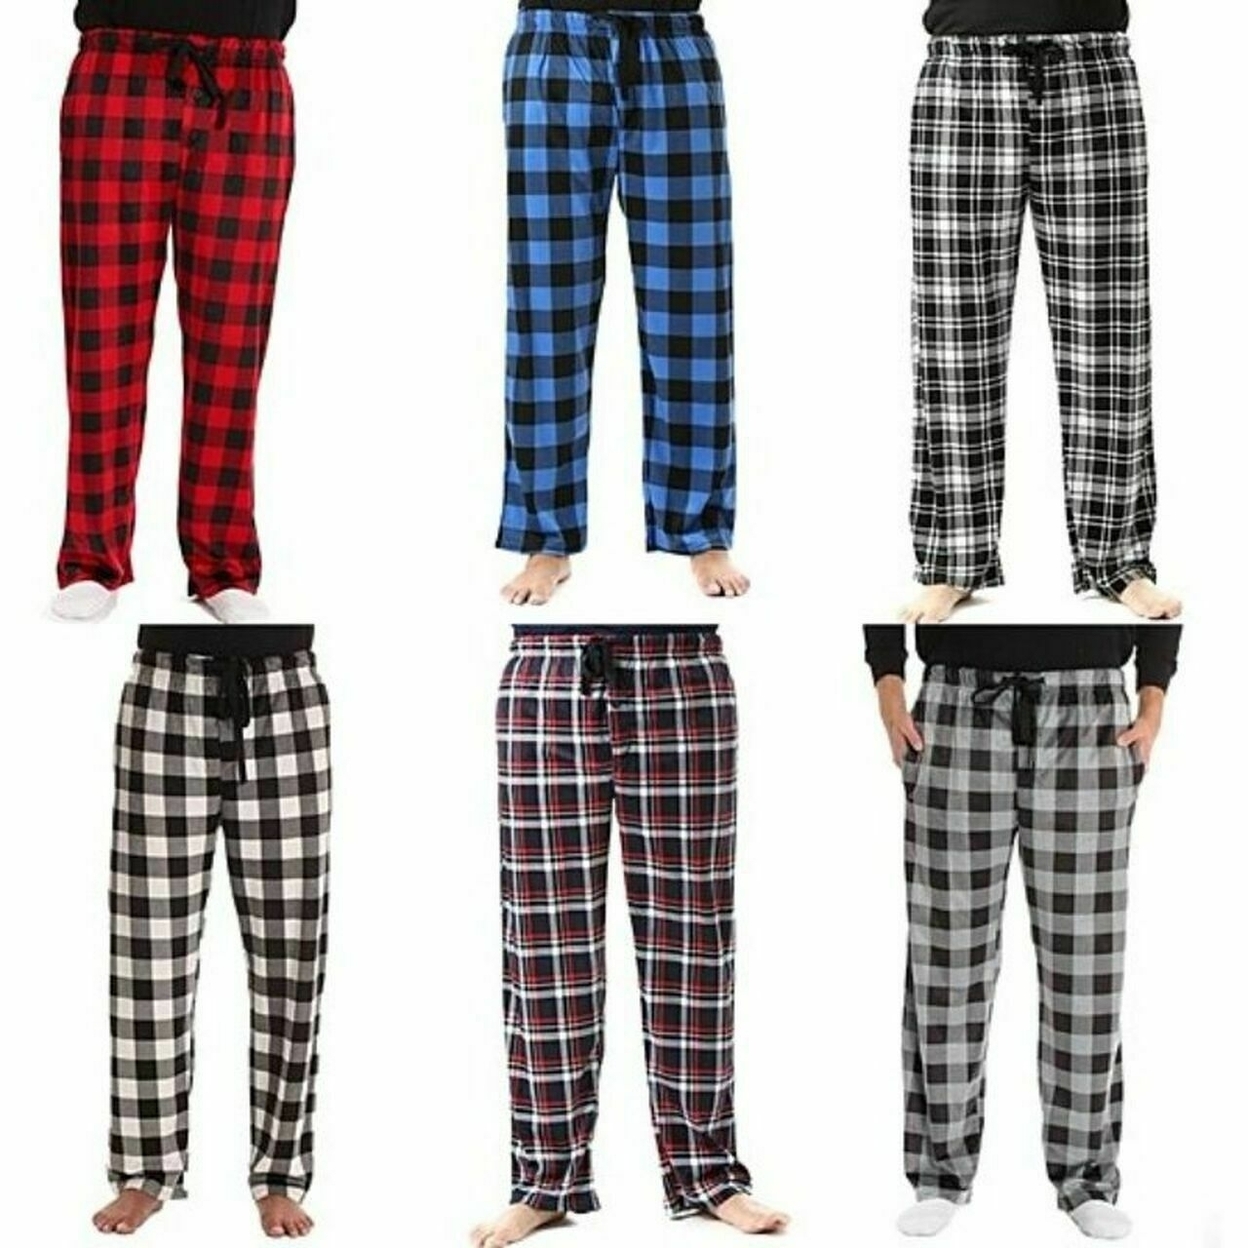 2-Pack: Men's Ultra Soft Cozy Flannel Fleece Plaid Pajama Sleep Bottom Lounge Pants - Black & Red, Large